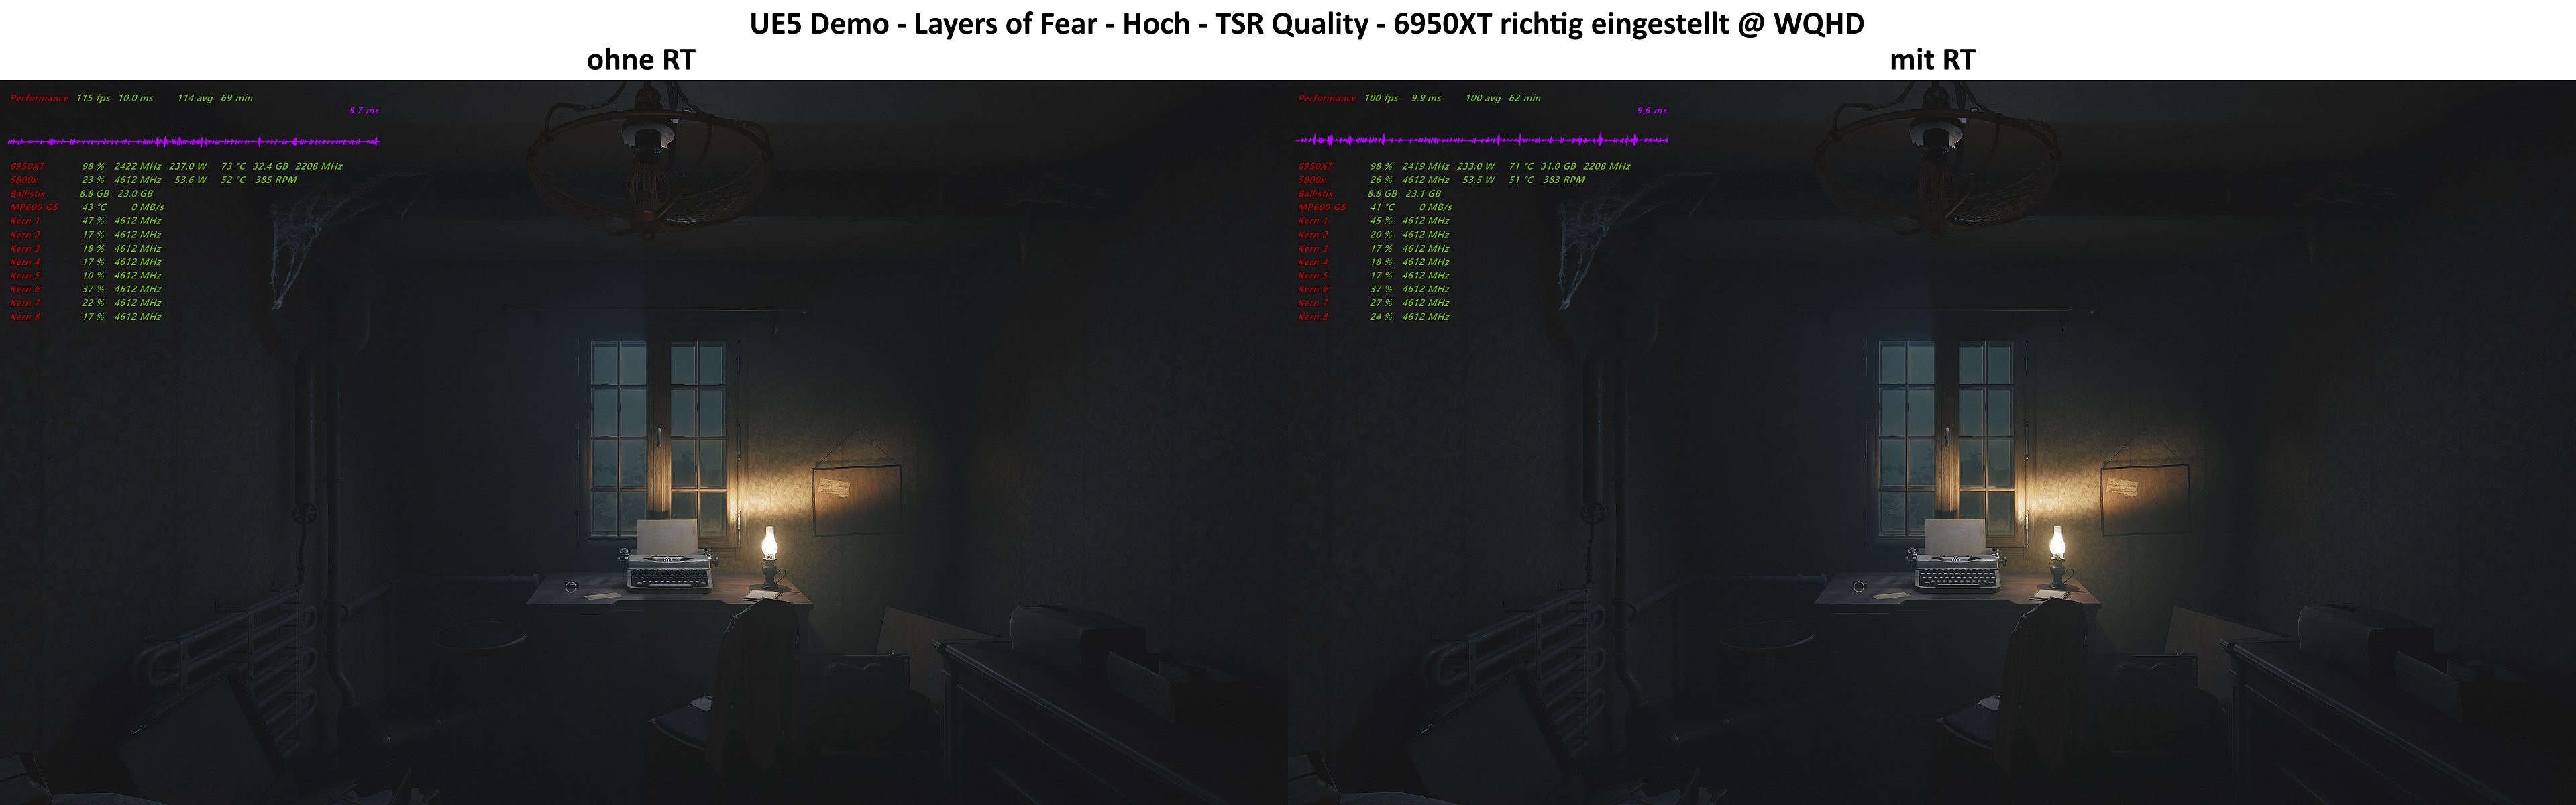 UE5 Demo - Layers of Fear - 6950XT.jpg